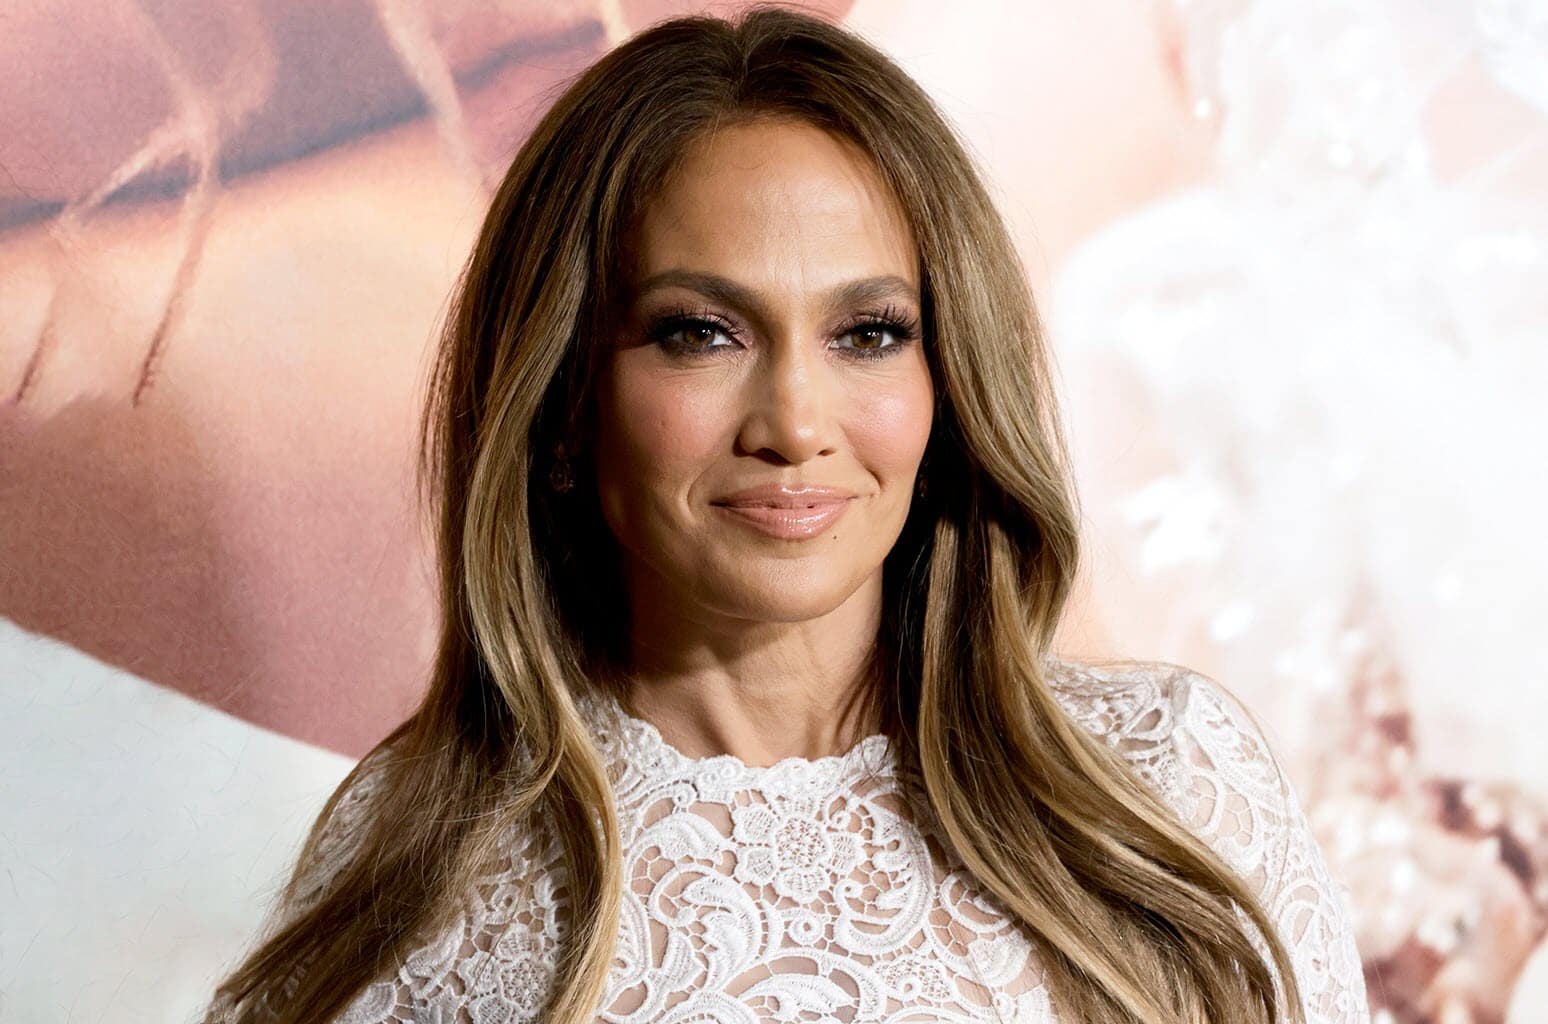 10 Best Jennifer Lopez Songs of All Time - Singersroom.com